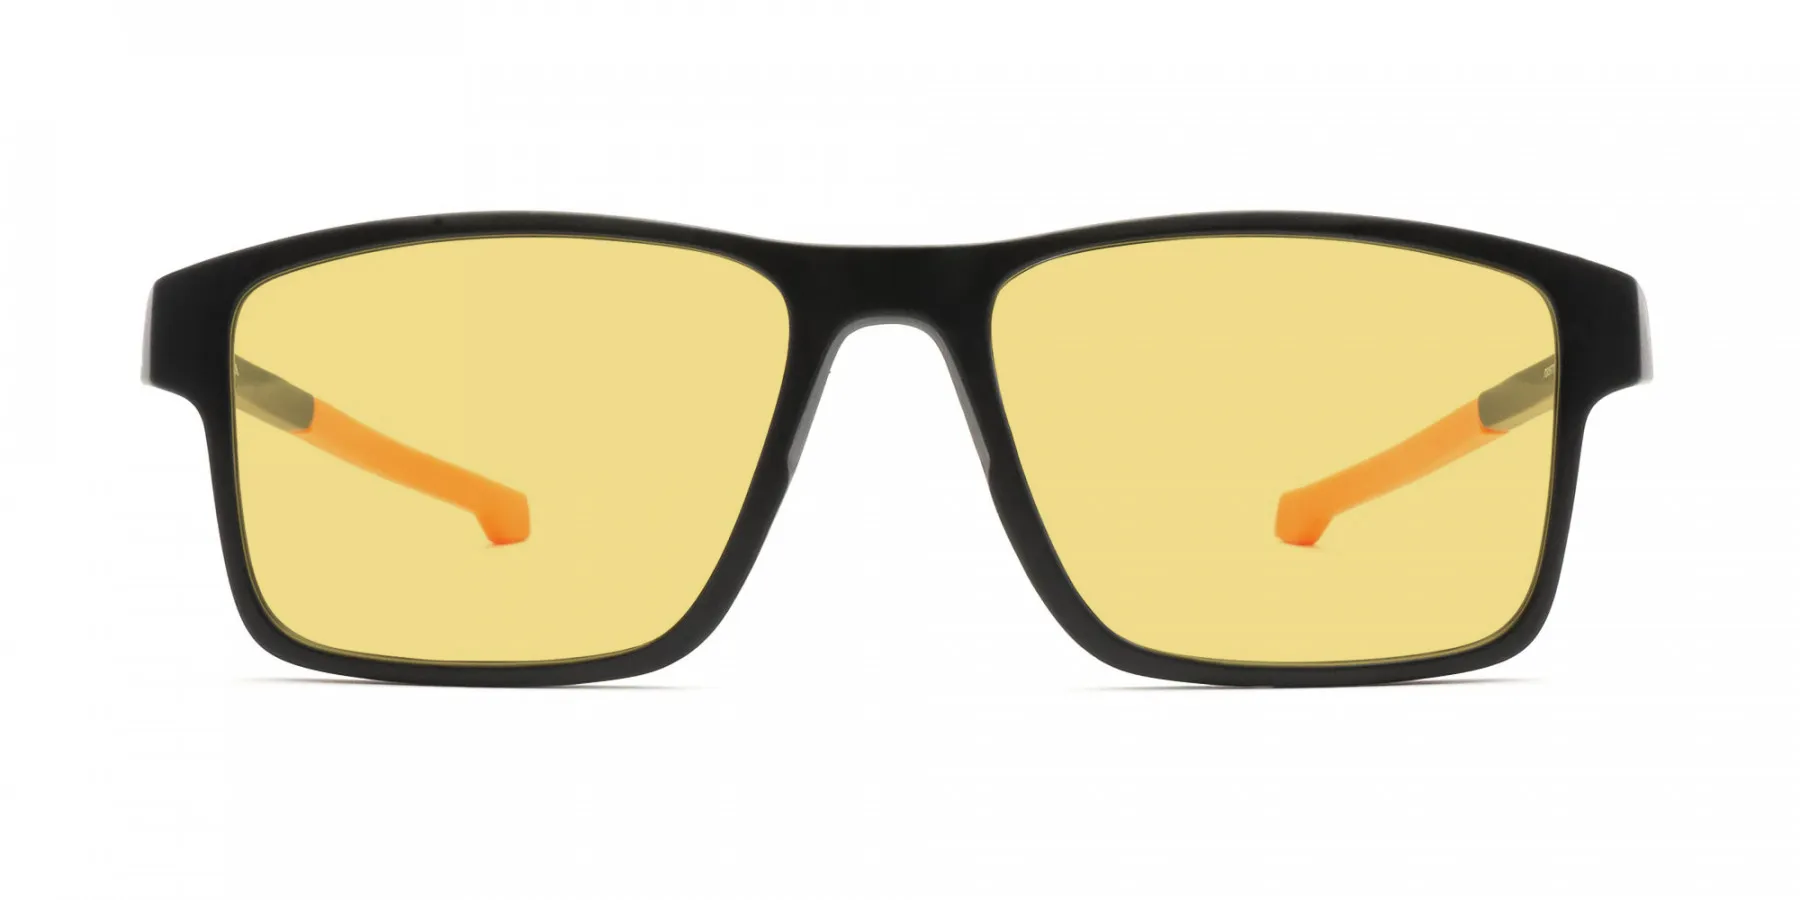 Rectangular Sports Sunglasses With Yellow Tint-2